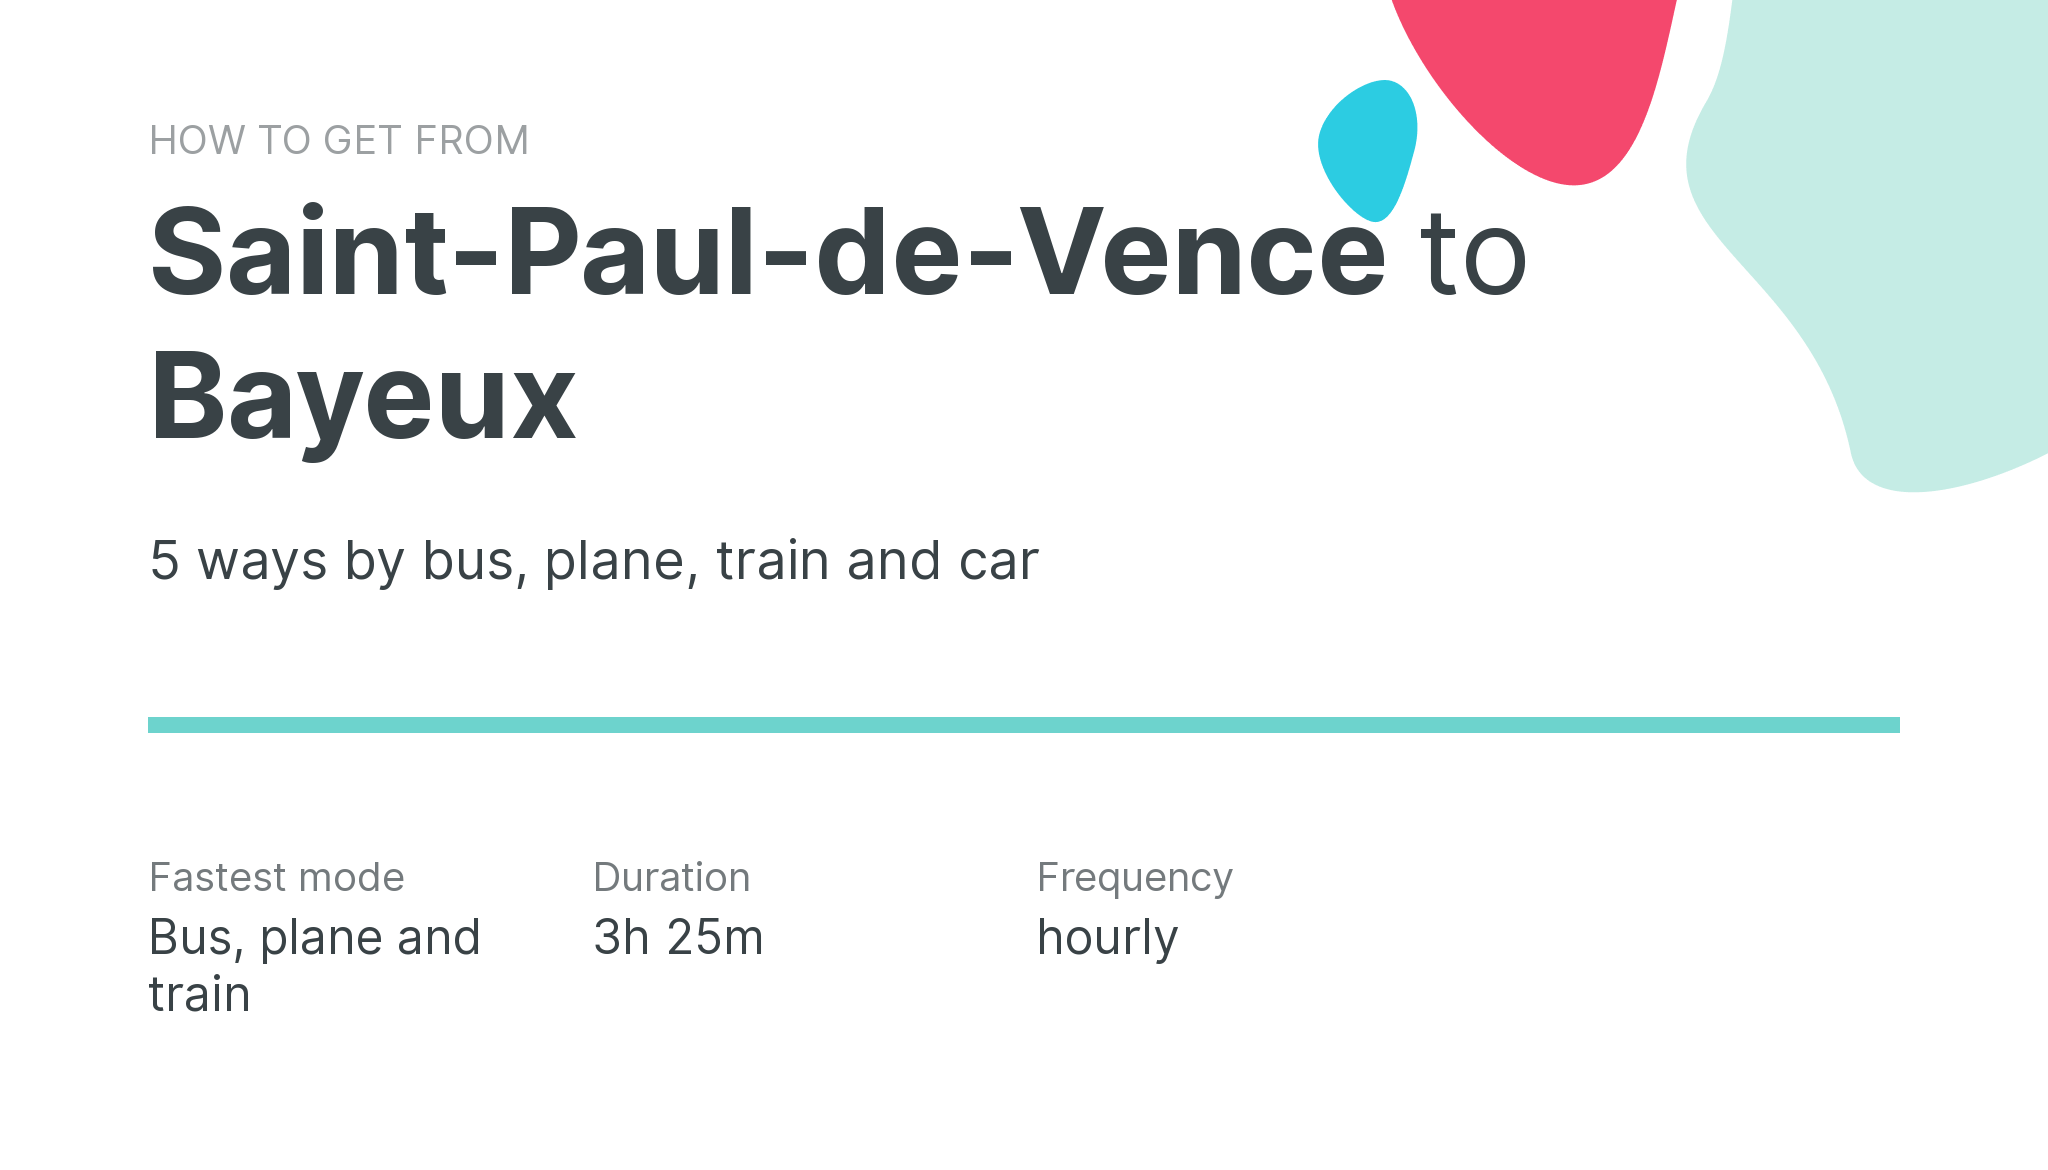 How do I get from Saint-Paul-de-Vence to Bayeux